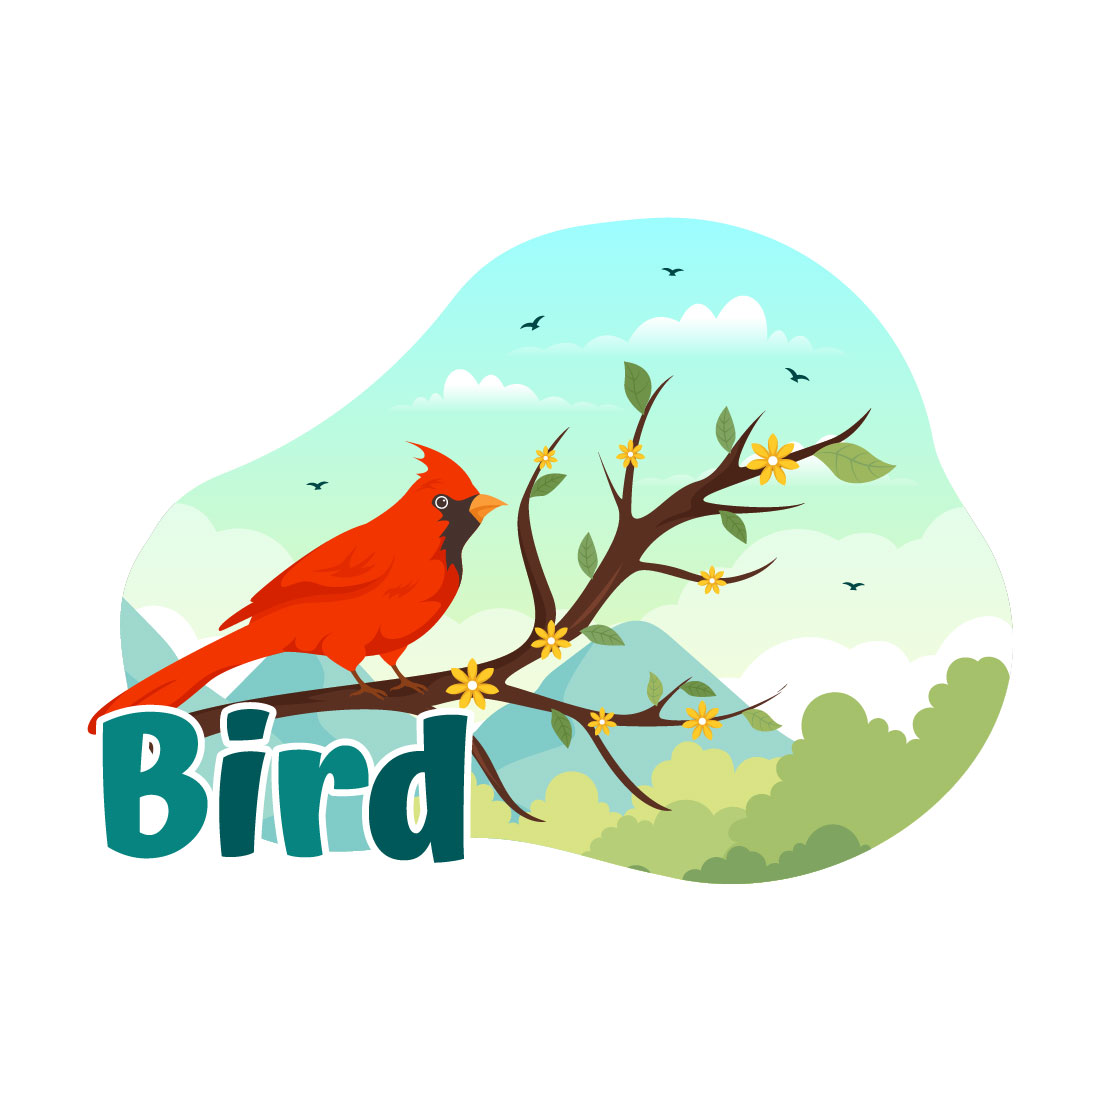 11 Bird Animal Vector Illustration cover image.